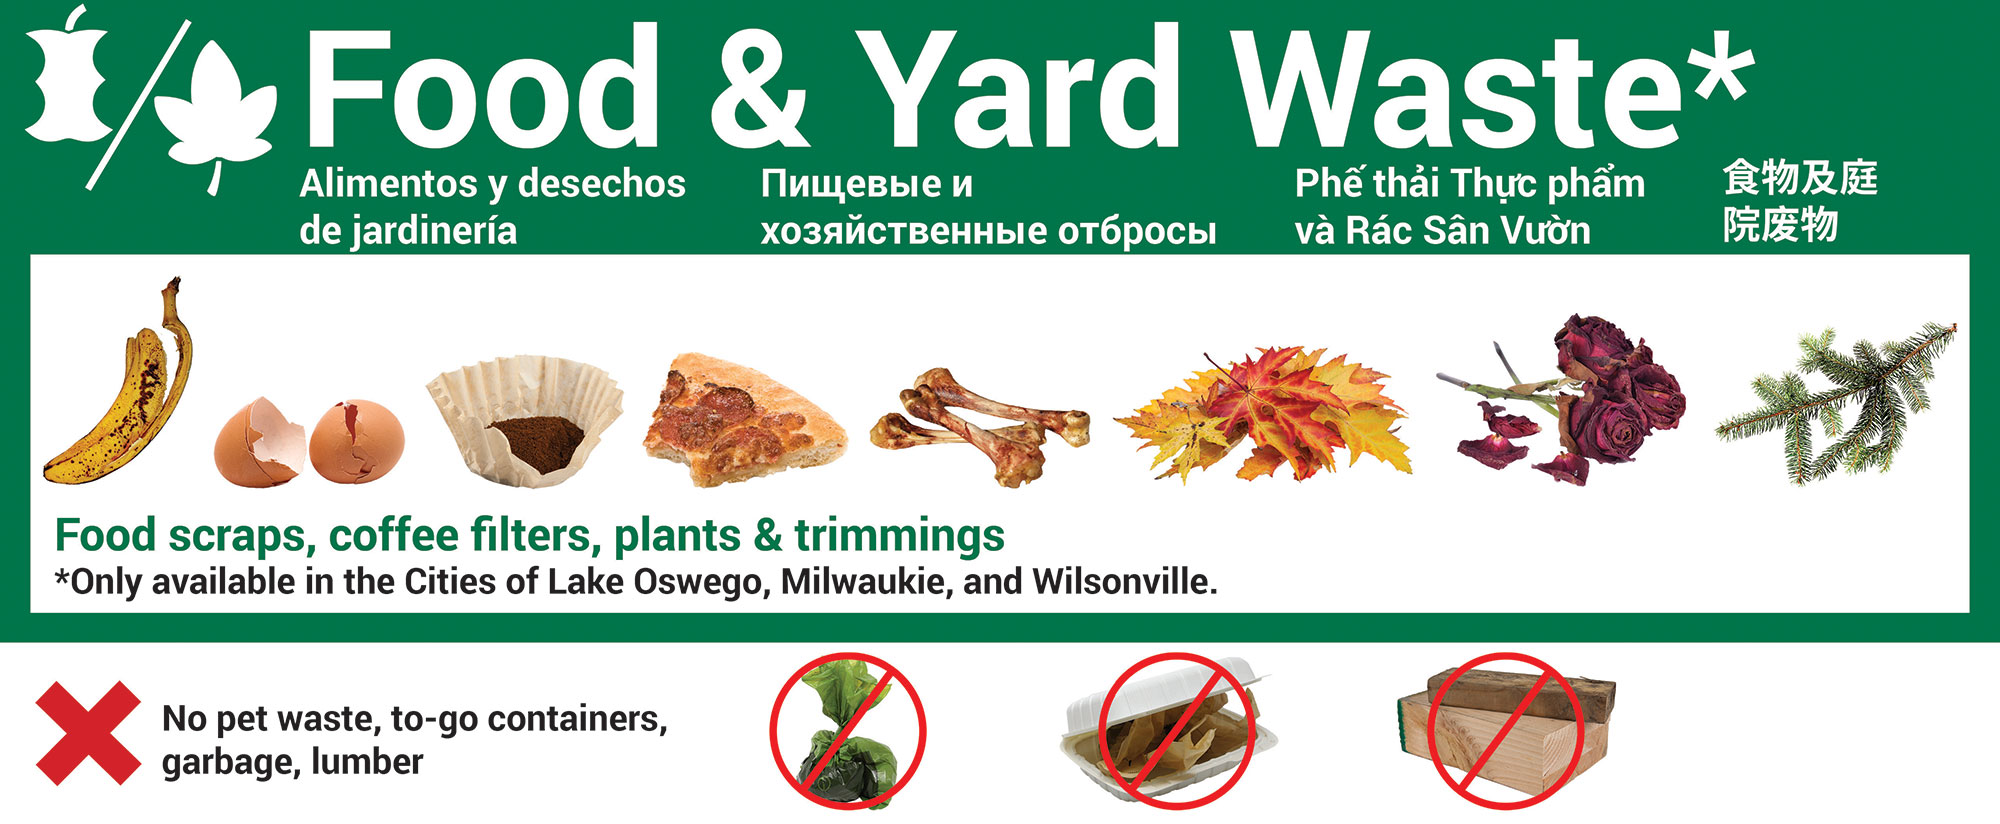 Food and Yard Waste